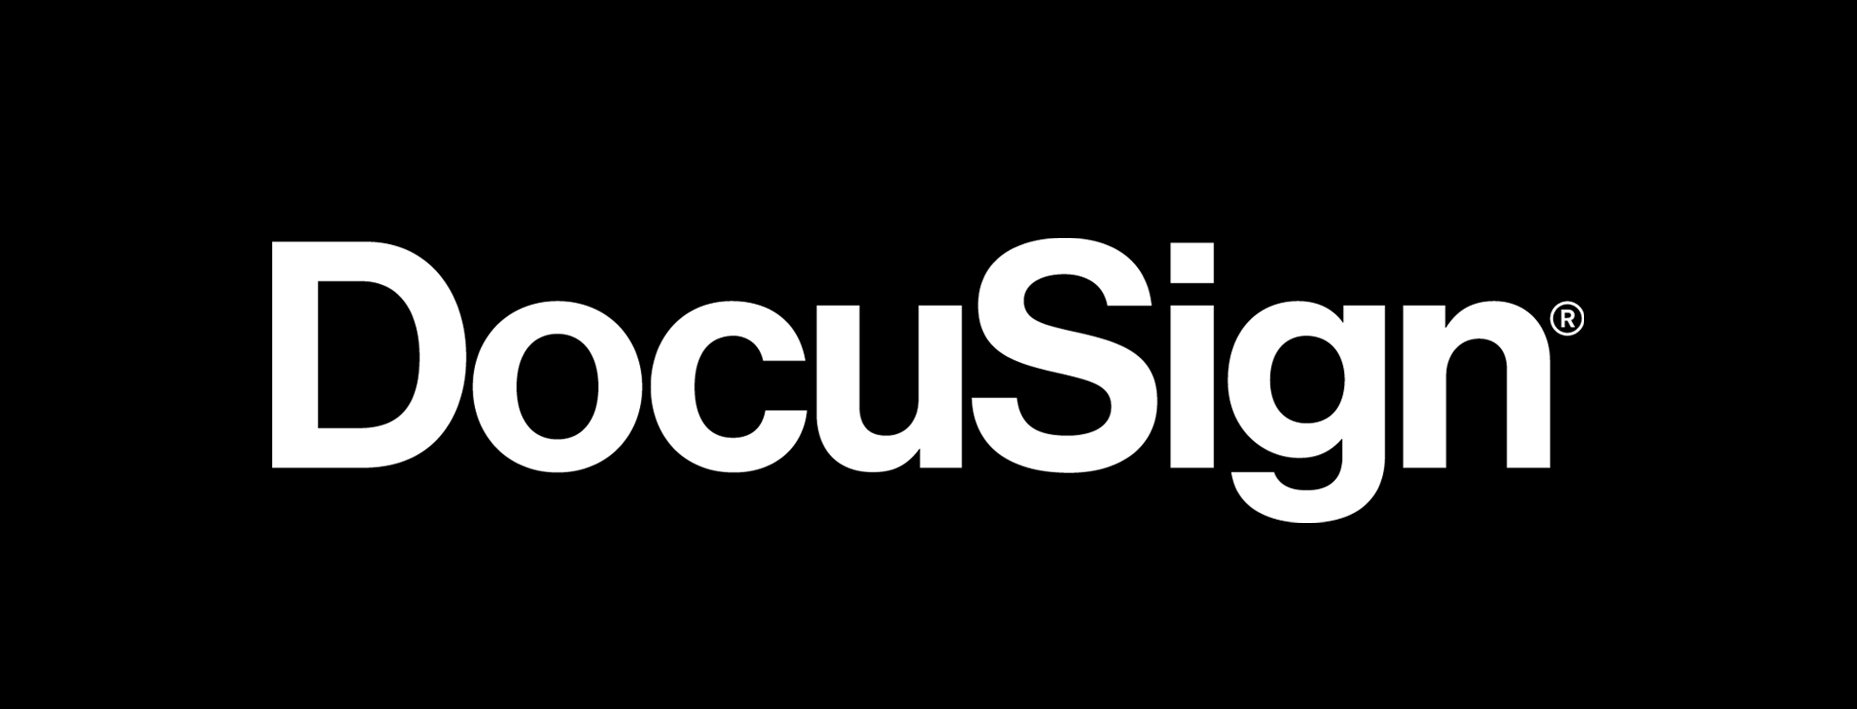 Docusign_Logo